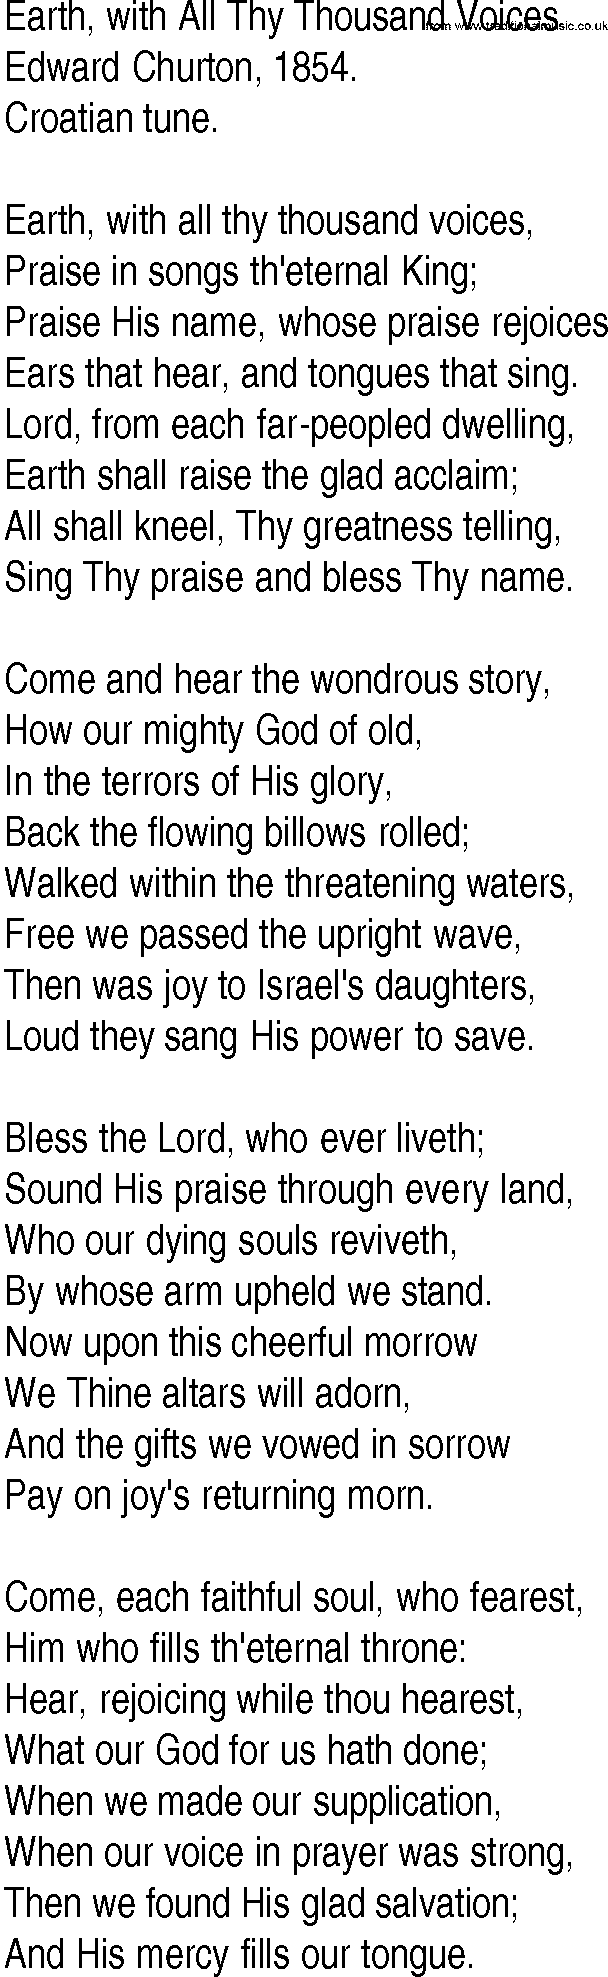 Hymn and Gospel Song: Earth, with All Thy Thousand Voices by Edward Churton lyrics